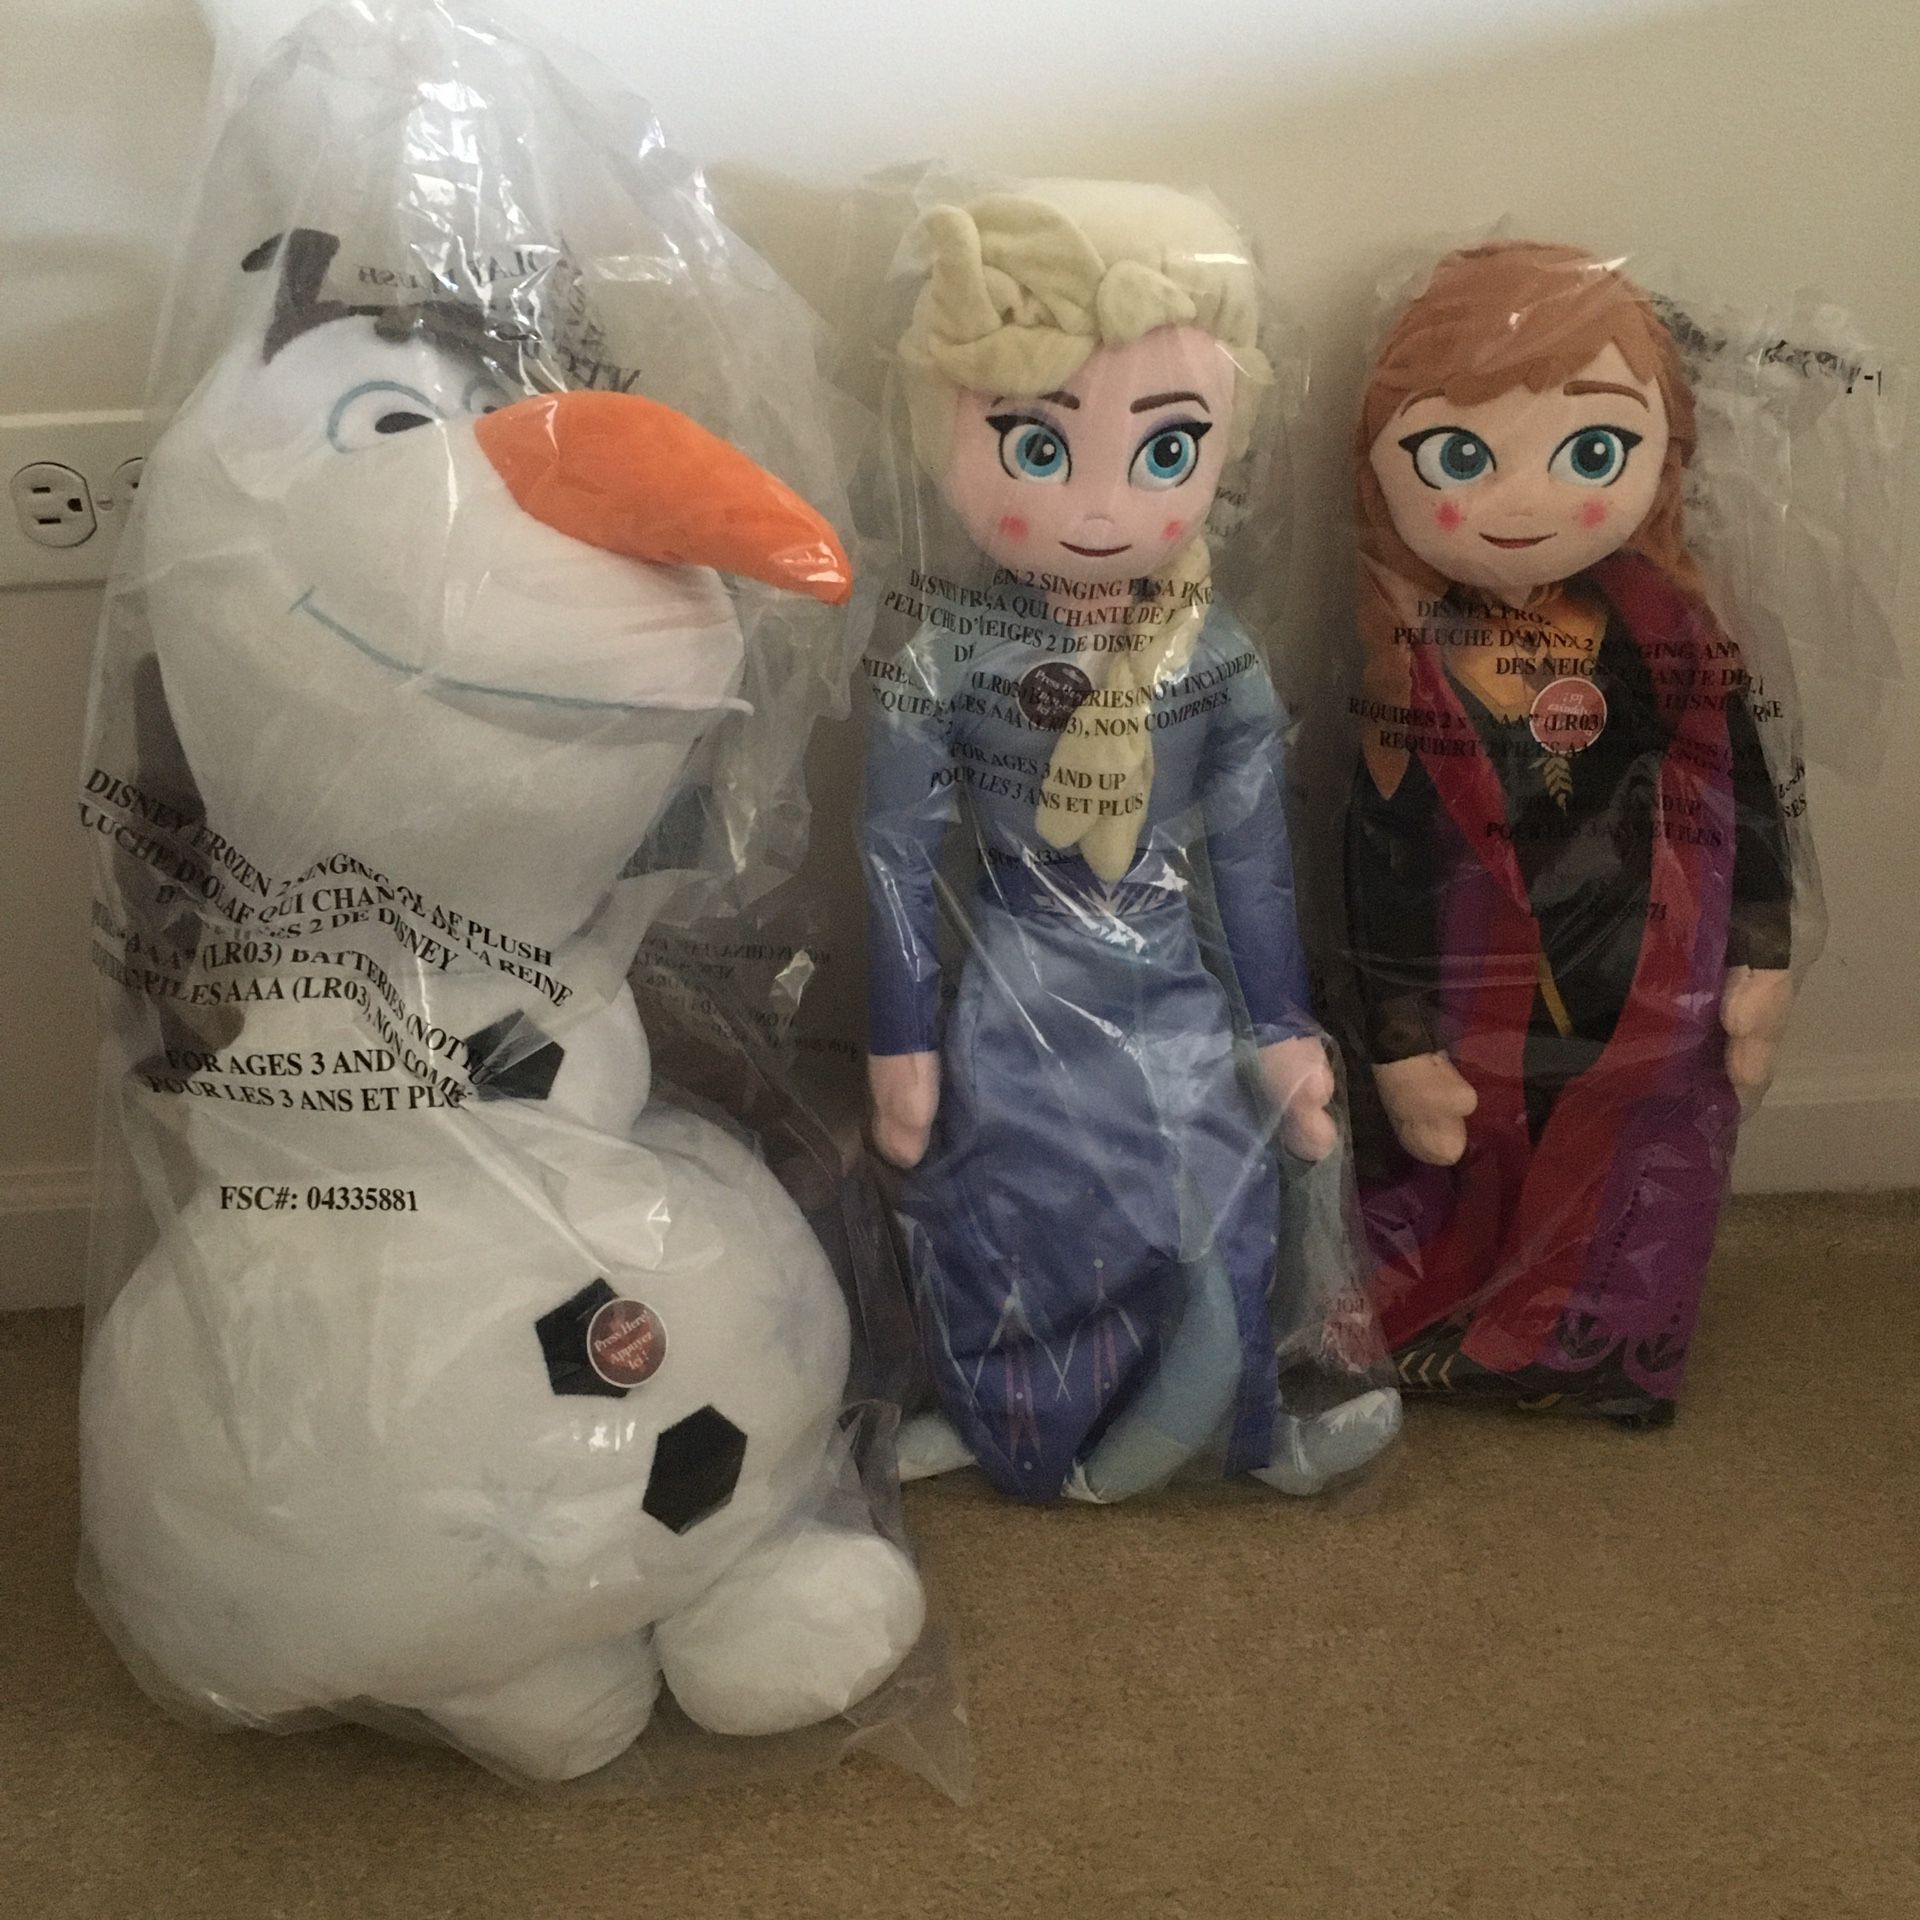 Frozen dolls!